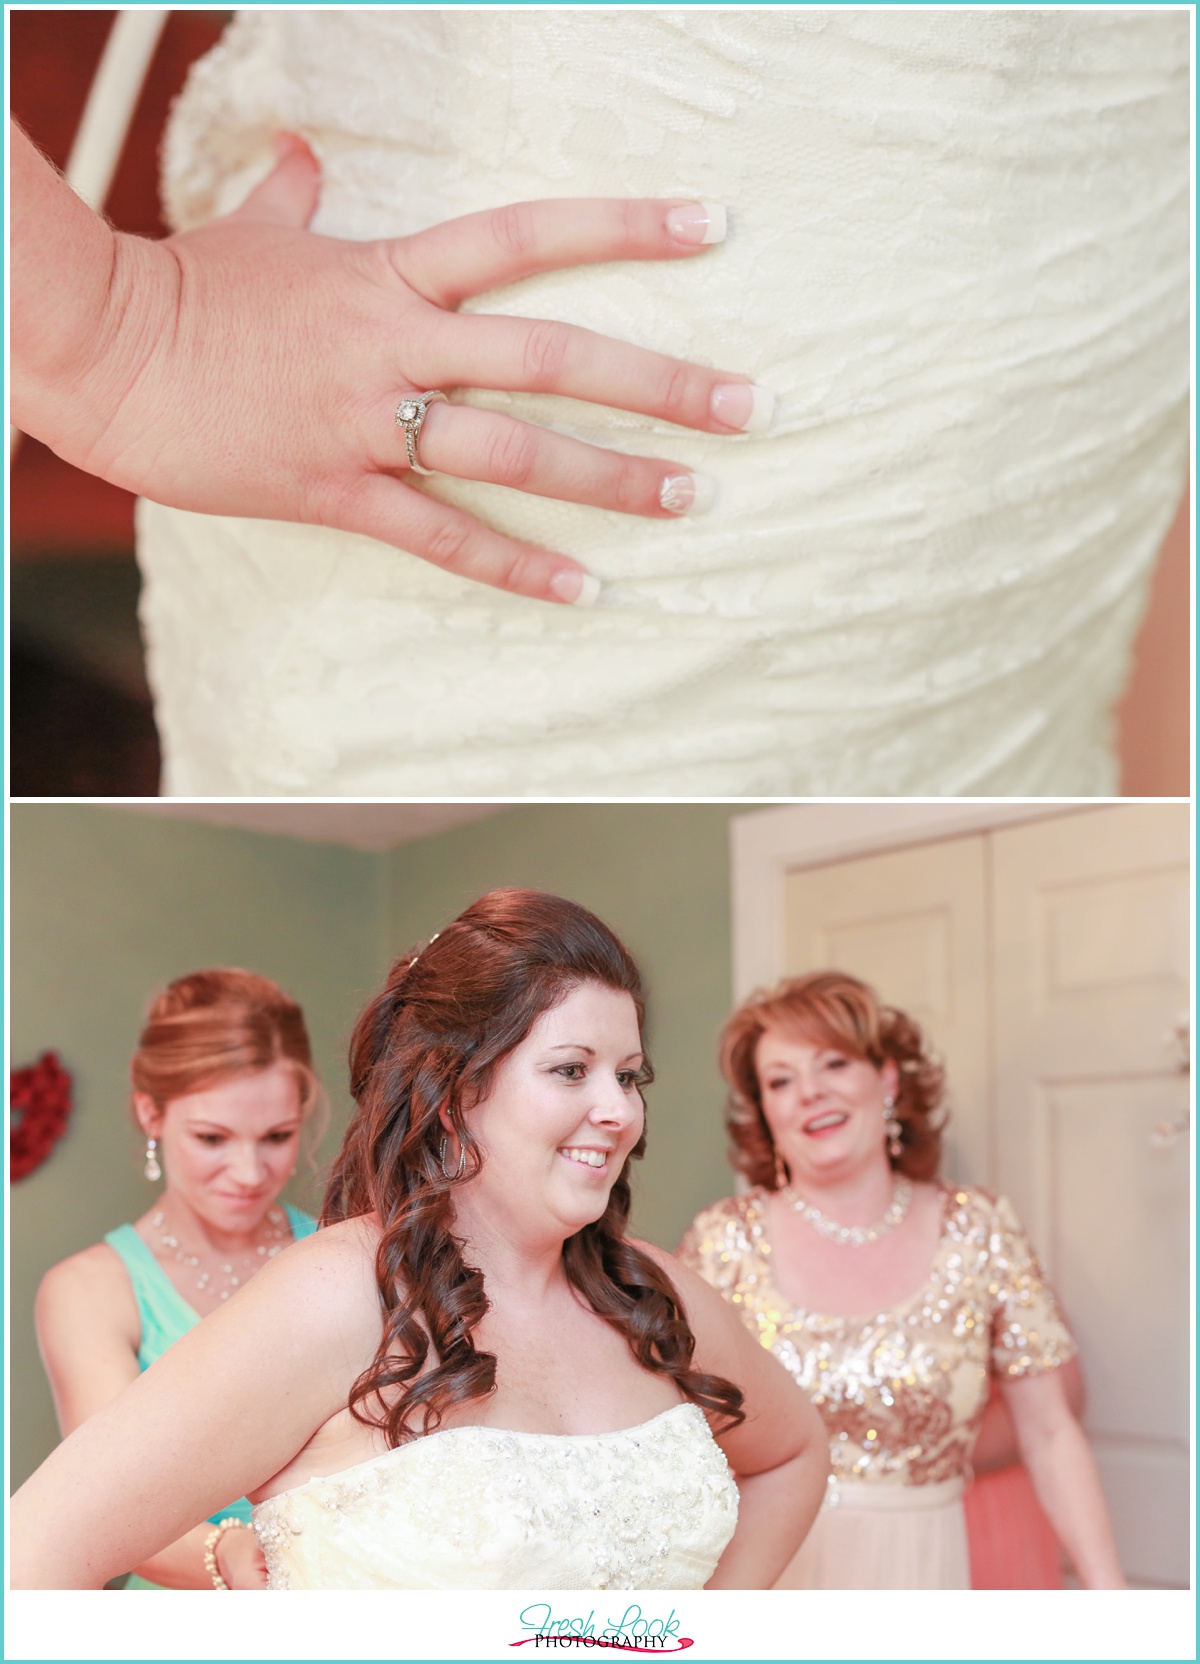 bridal wedding details